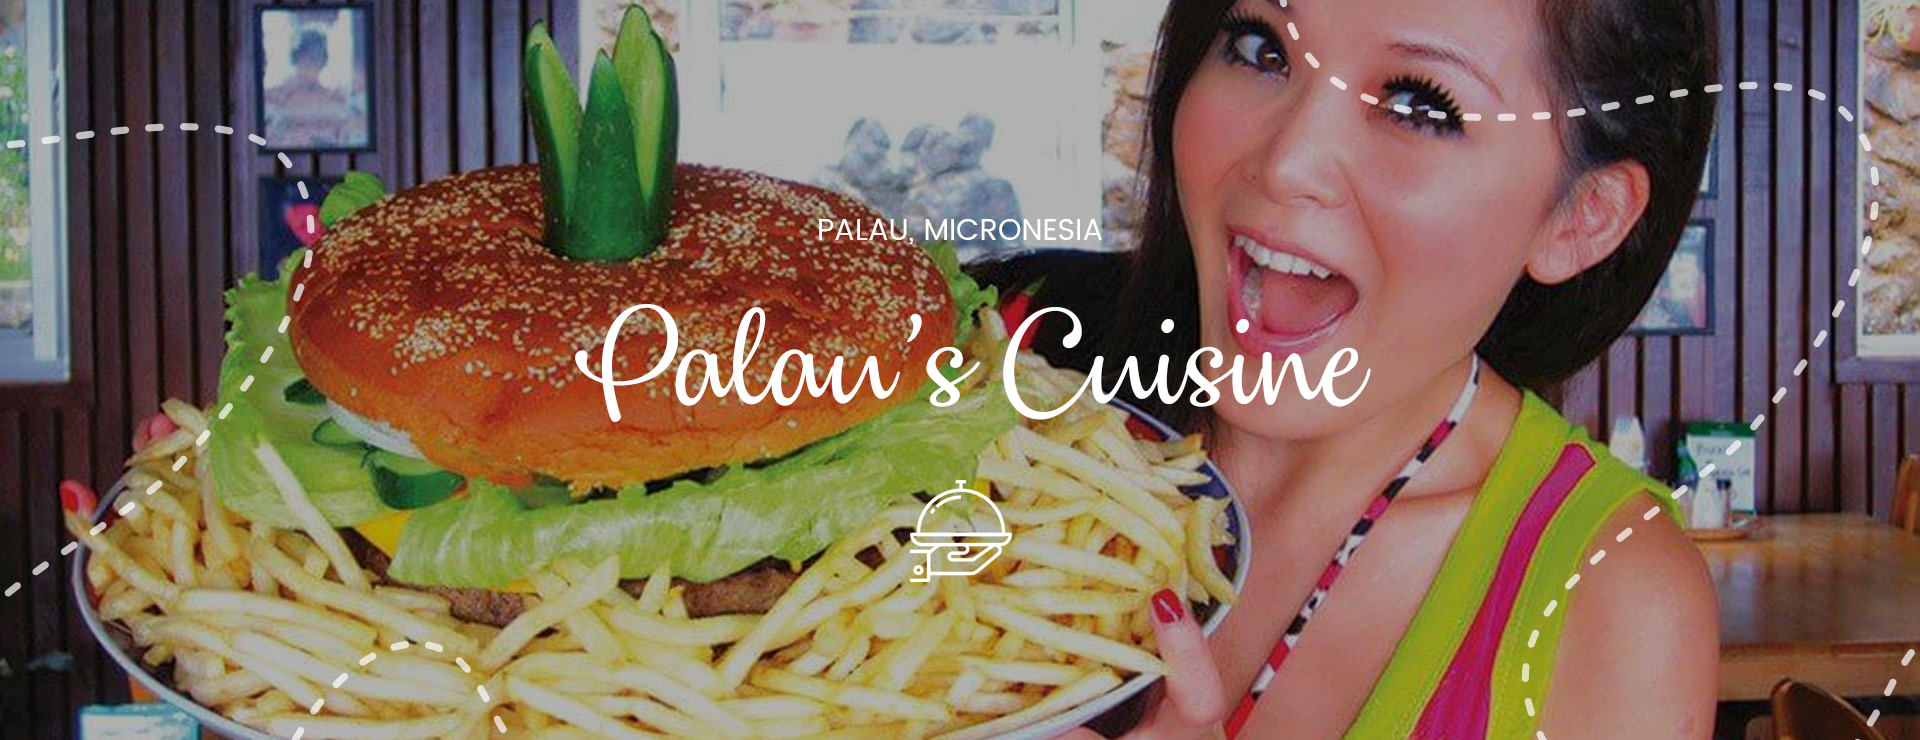 Palau's Cuisine